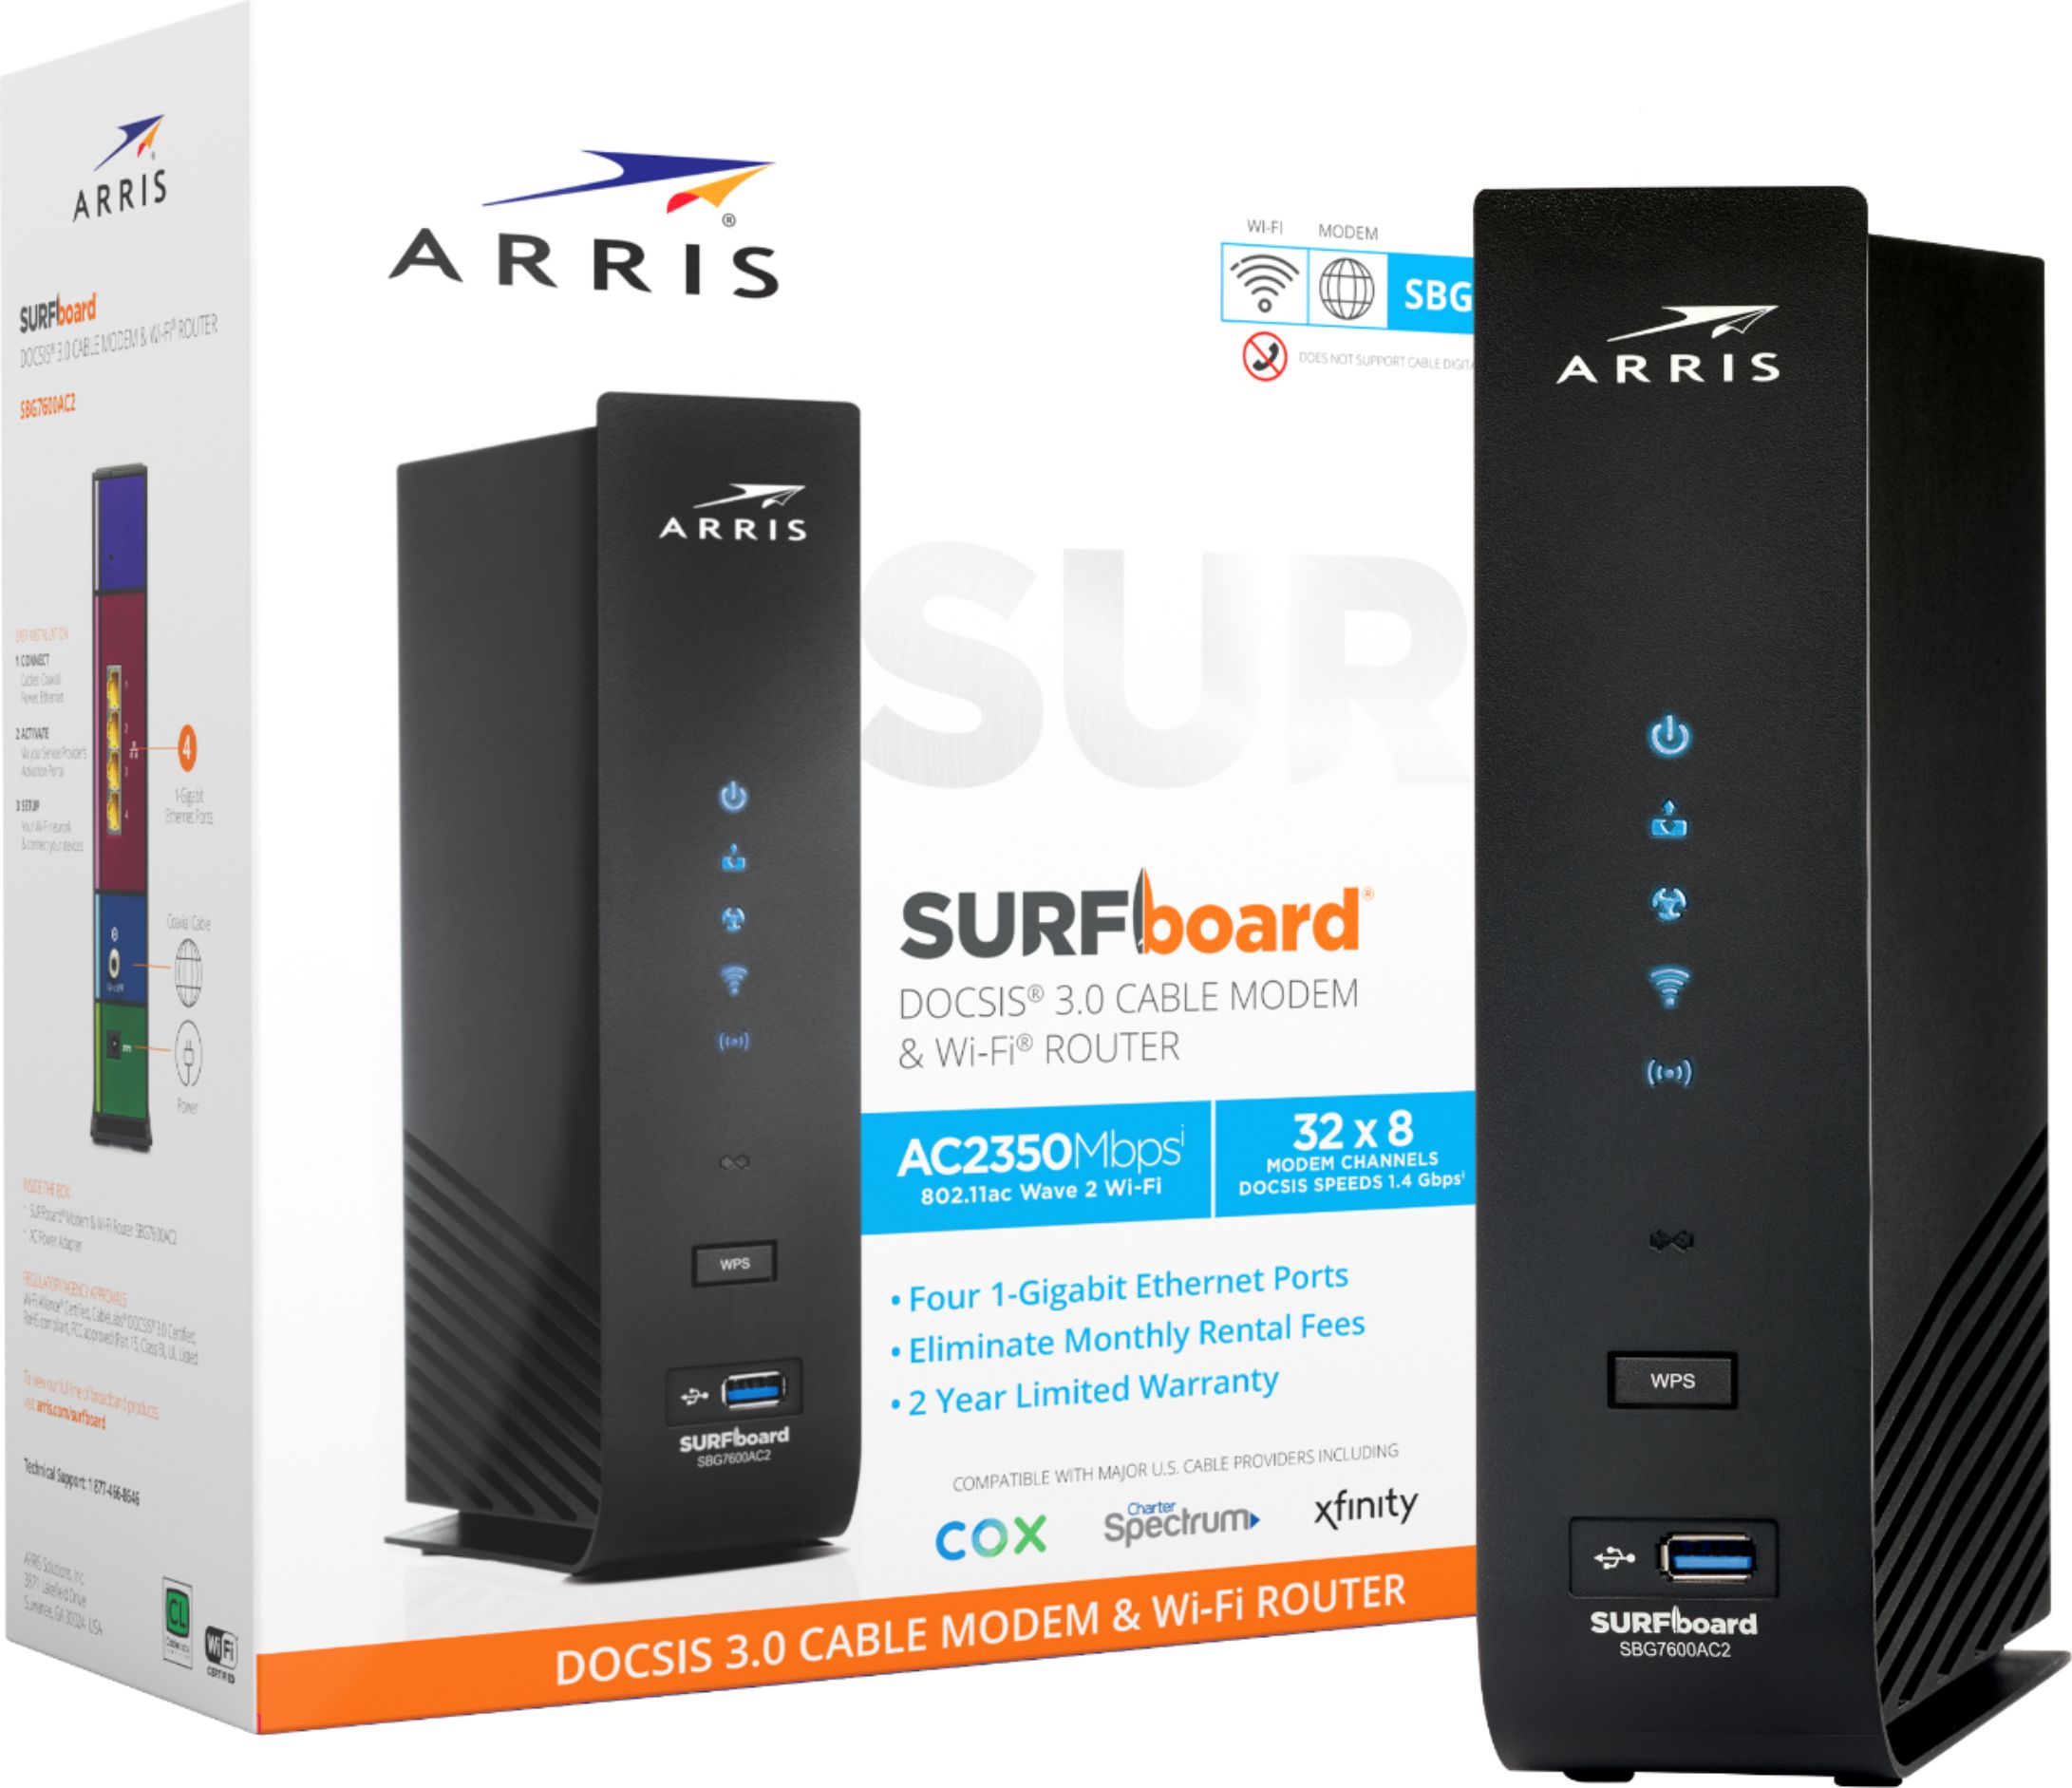 ARRIS SURFboard DOCSIS 3.0 Cable Modem AC2350 Router Combo Black SBG7600 Best Buy